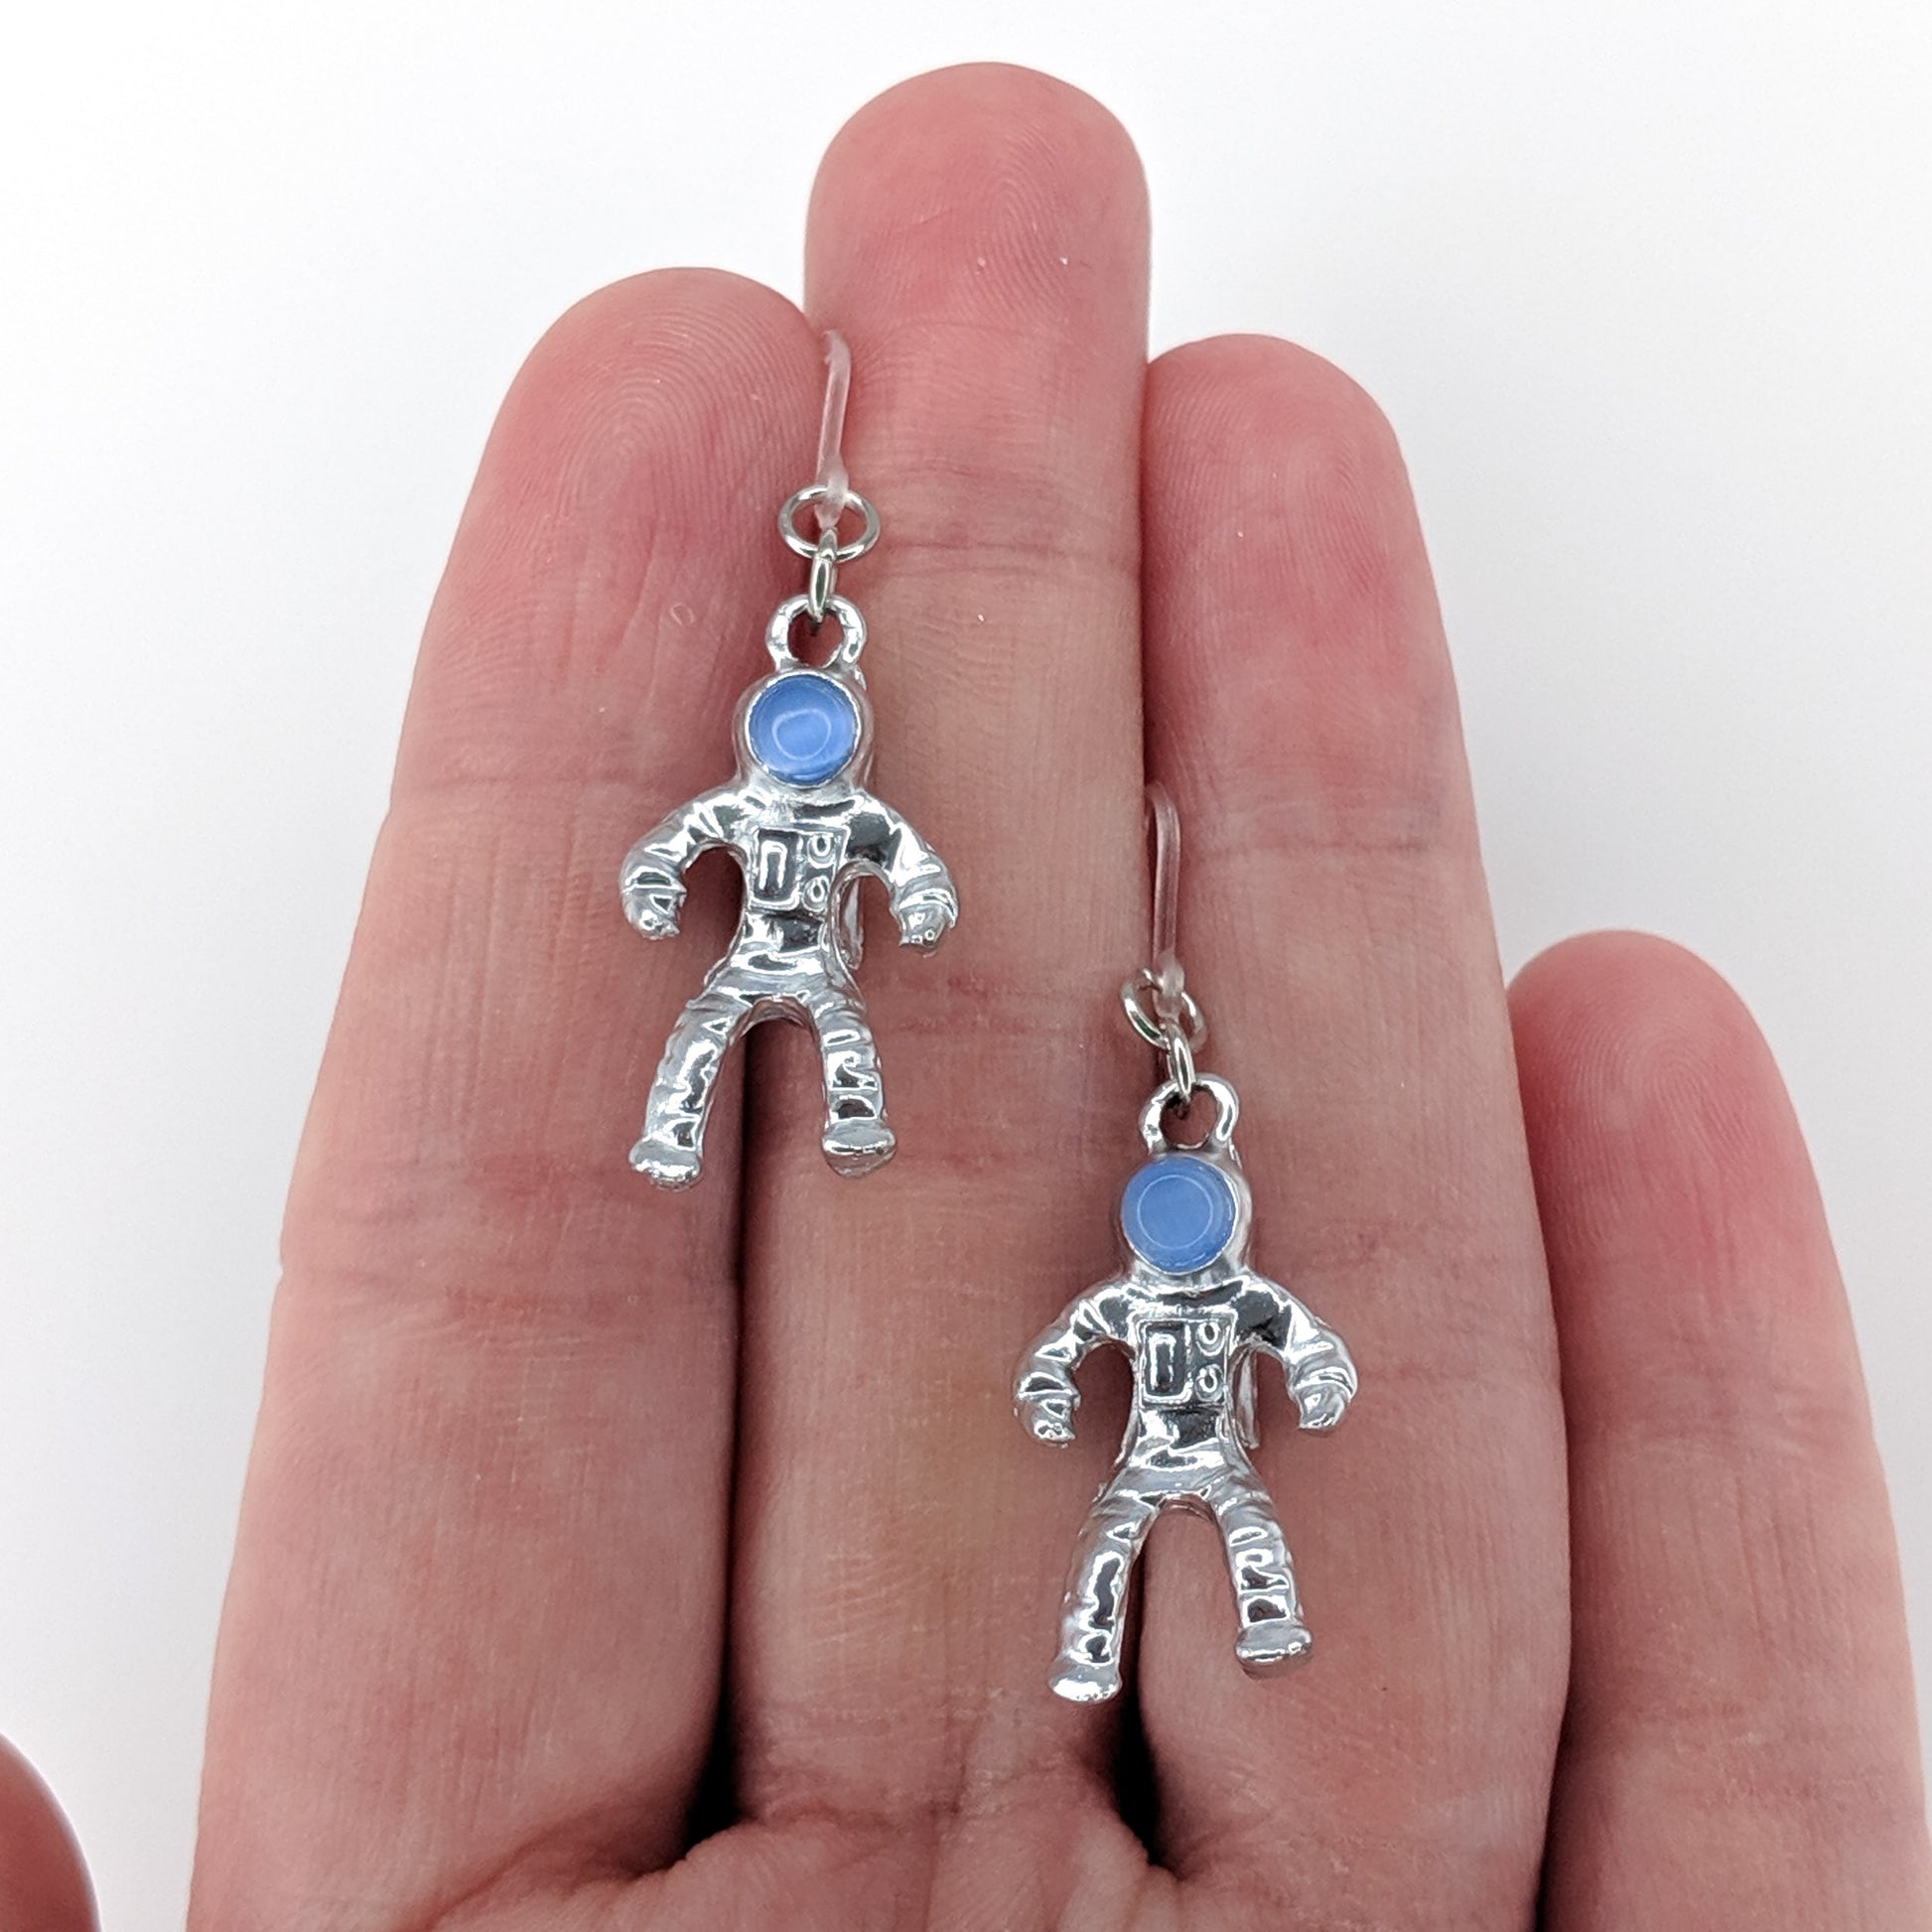 Metallic Astronaut Earrings (Dangles) - size comparison hand